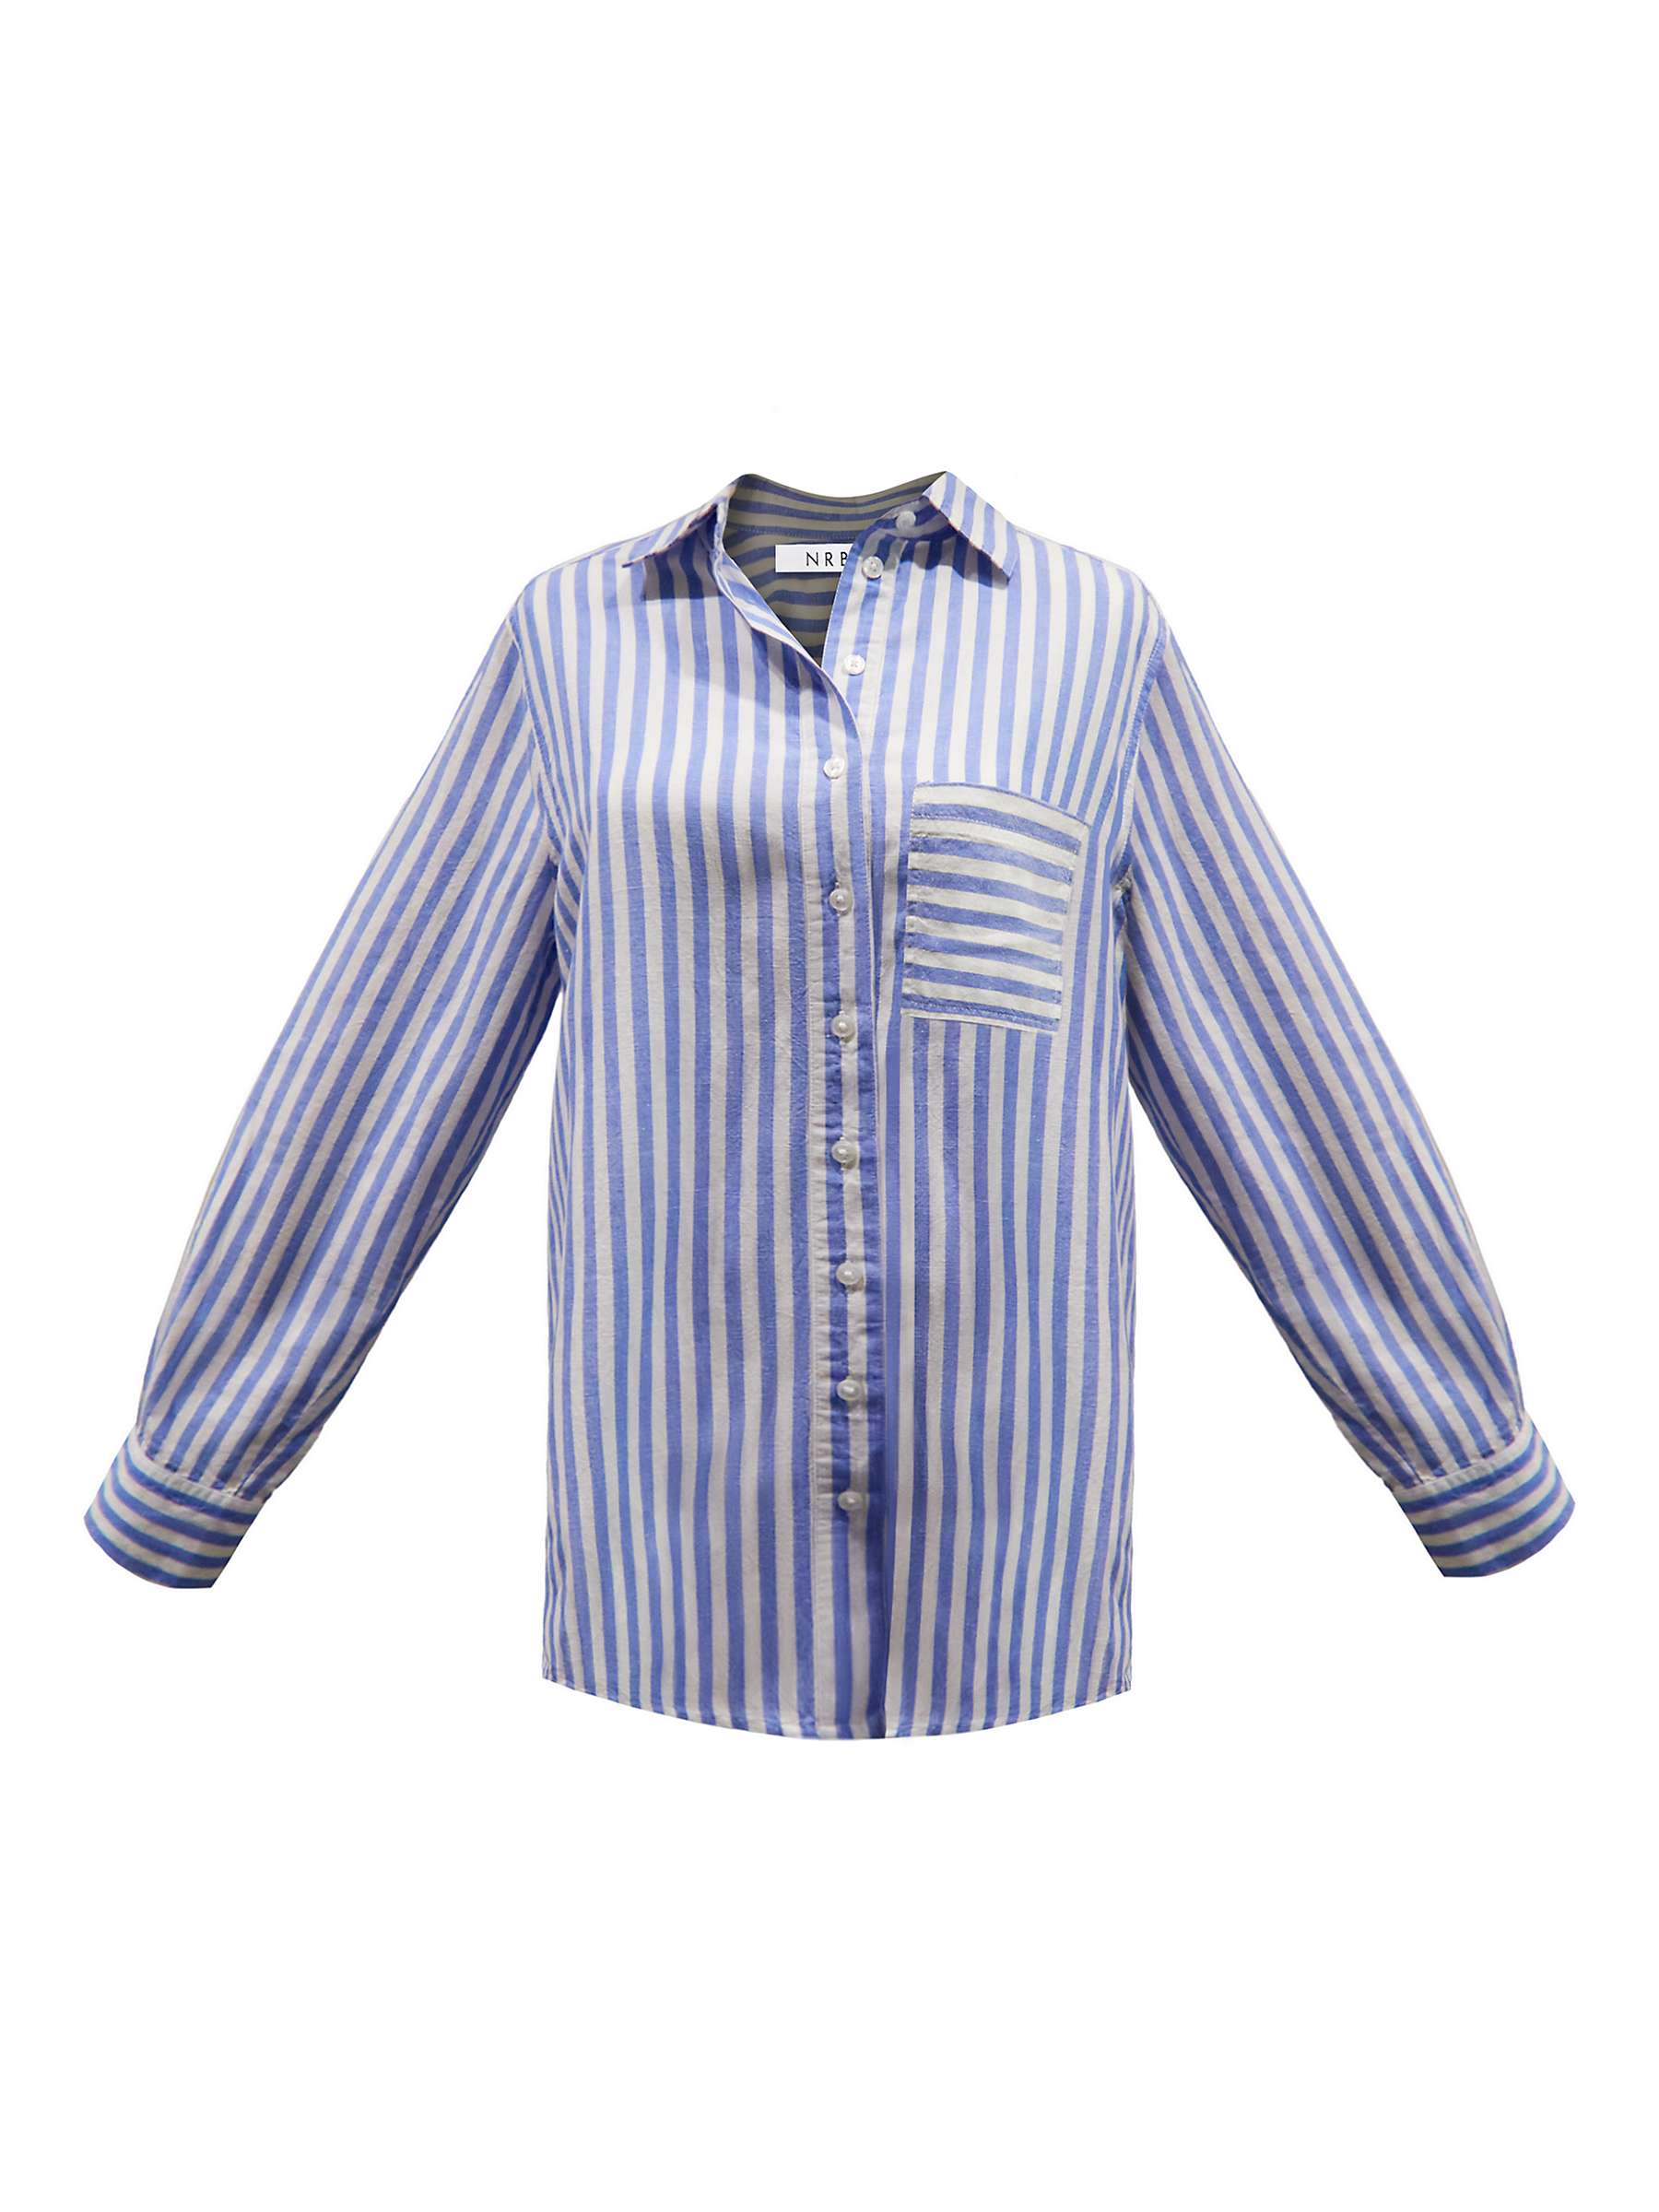 Buy NRBY Winona Linen Blend Stripe Shirt Online at johnlewis.com